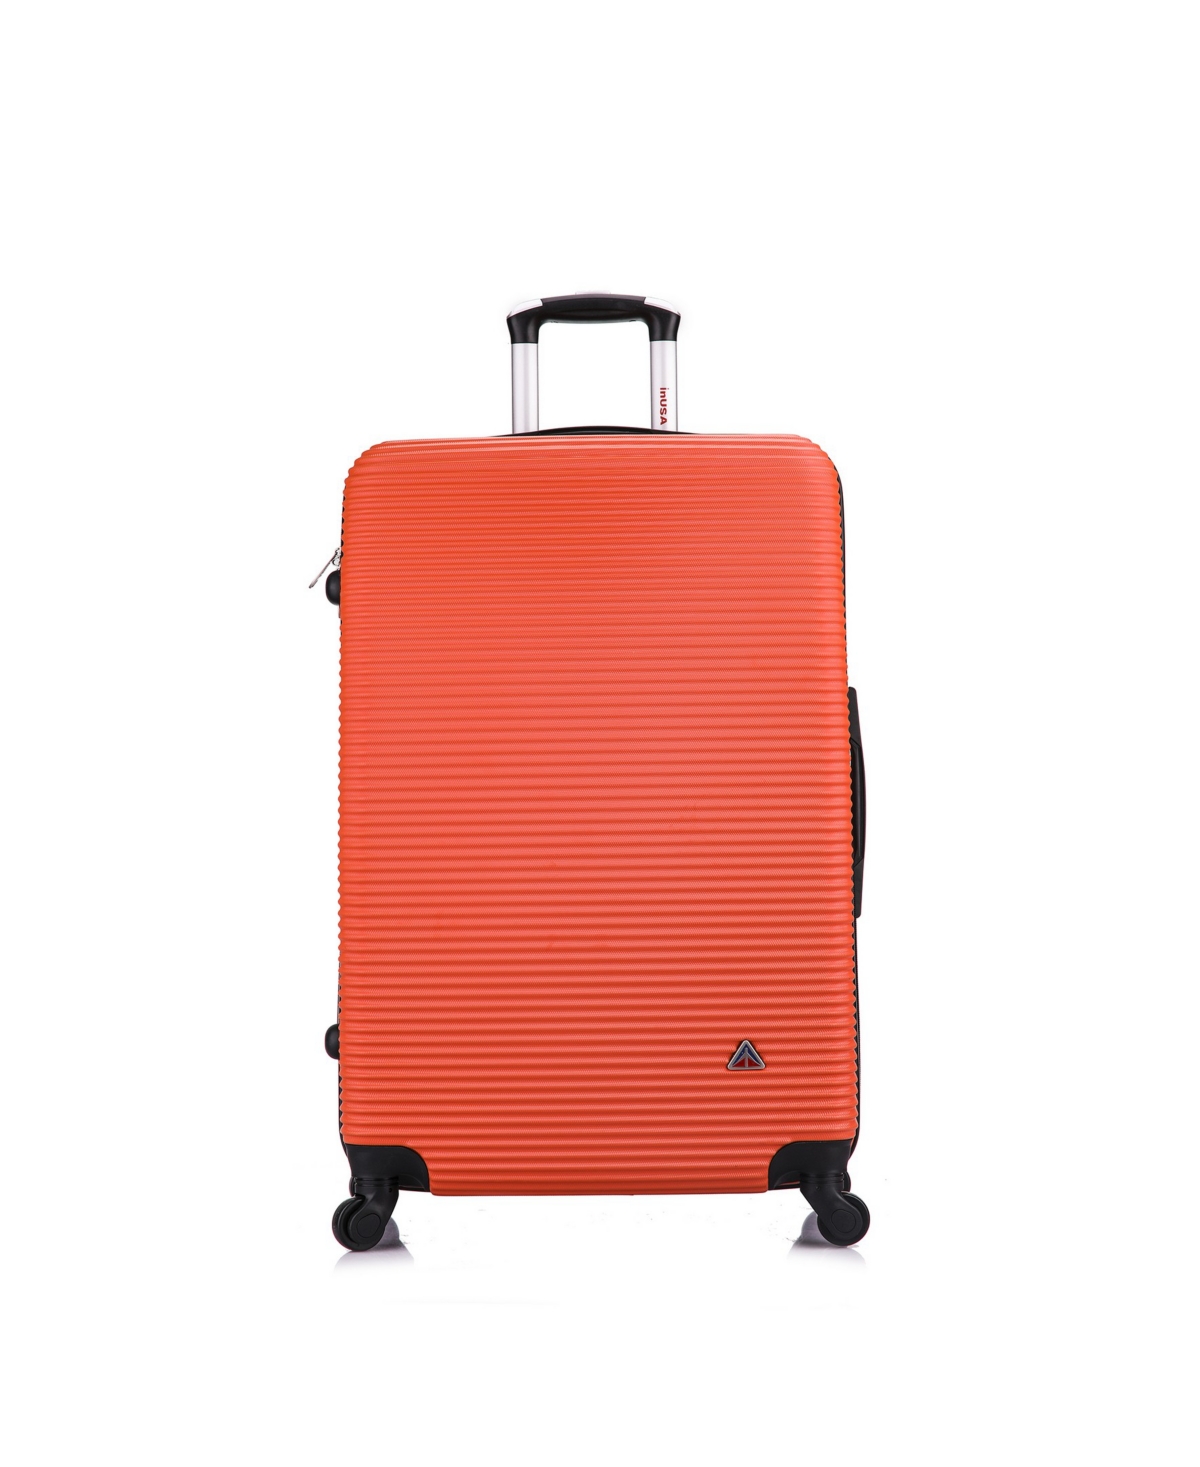 Royal 28" Lightweight Hardside Spinner Luggage - Orange